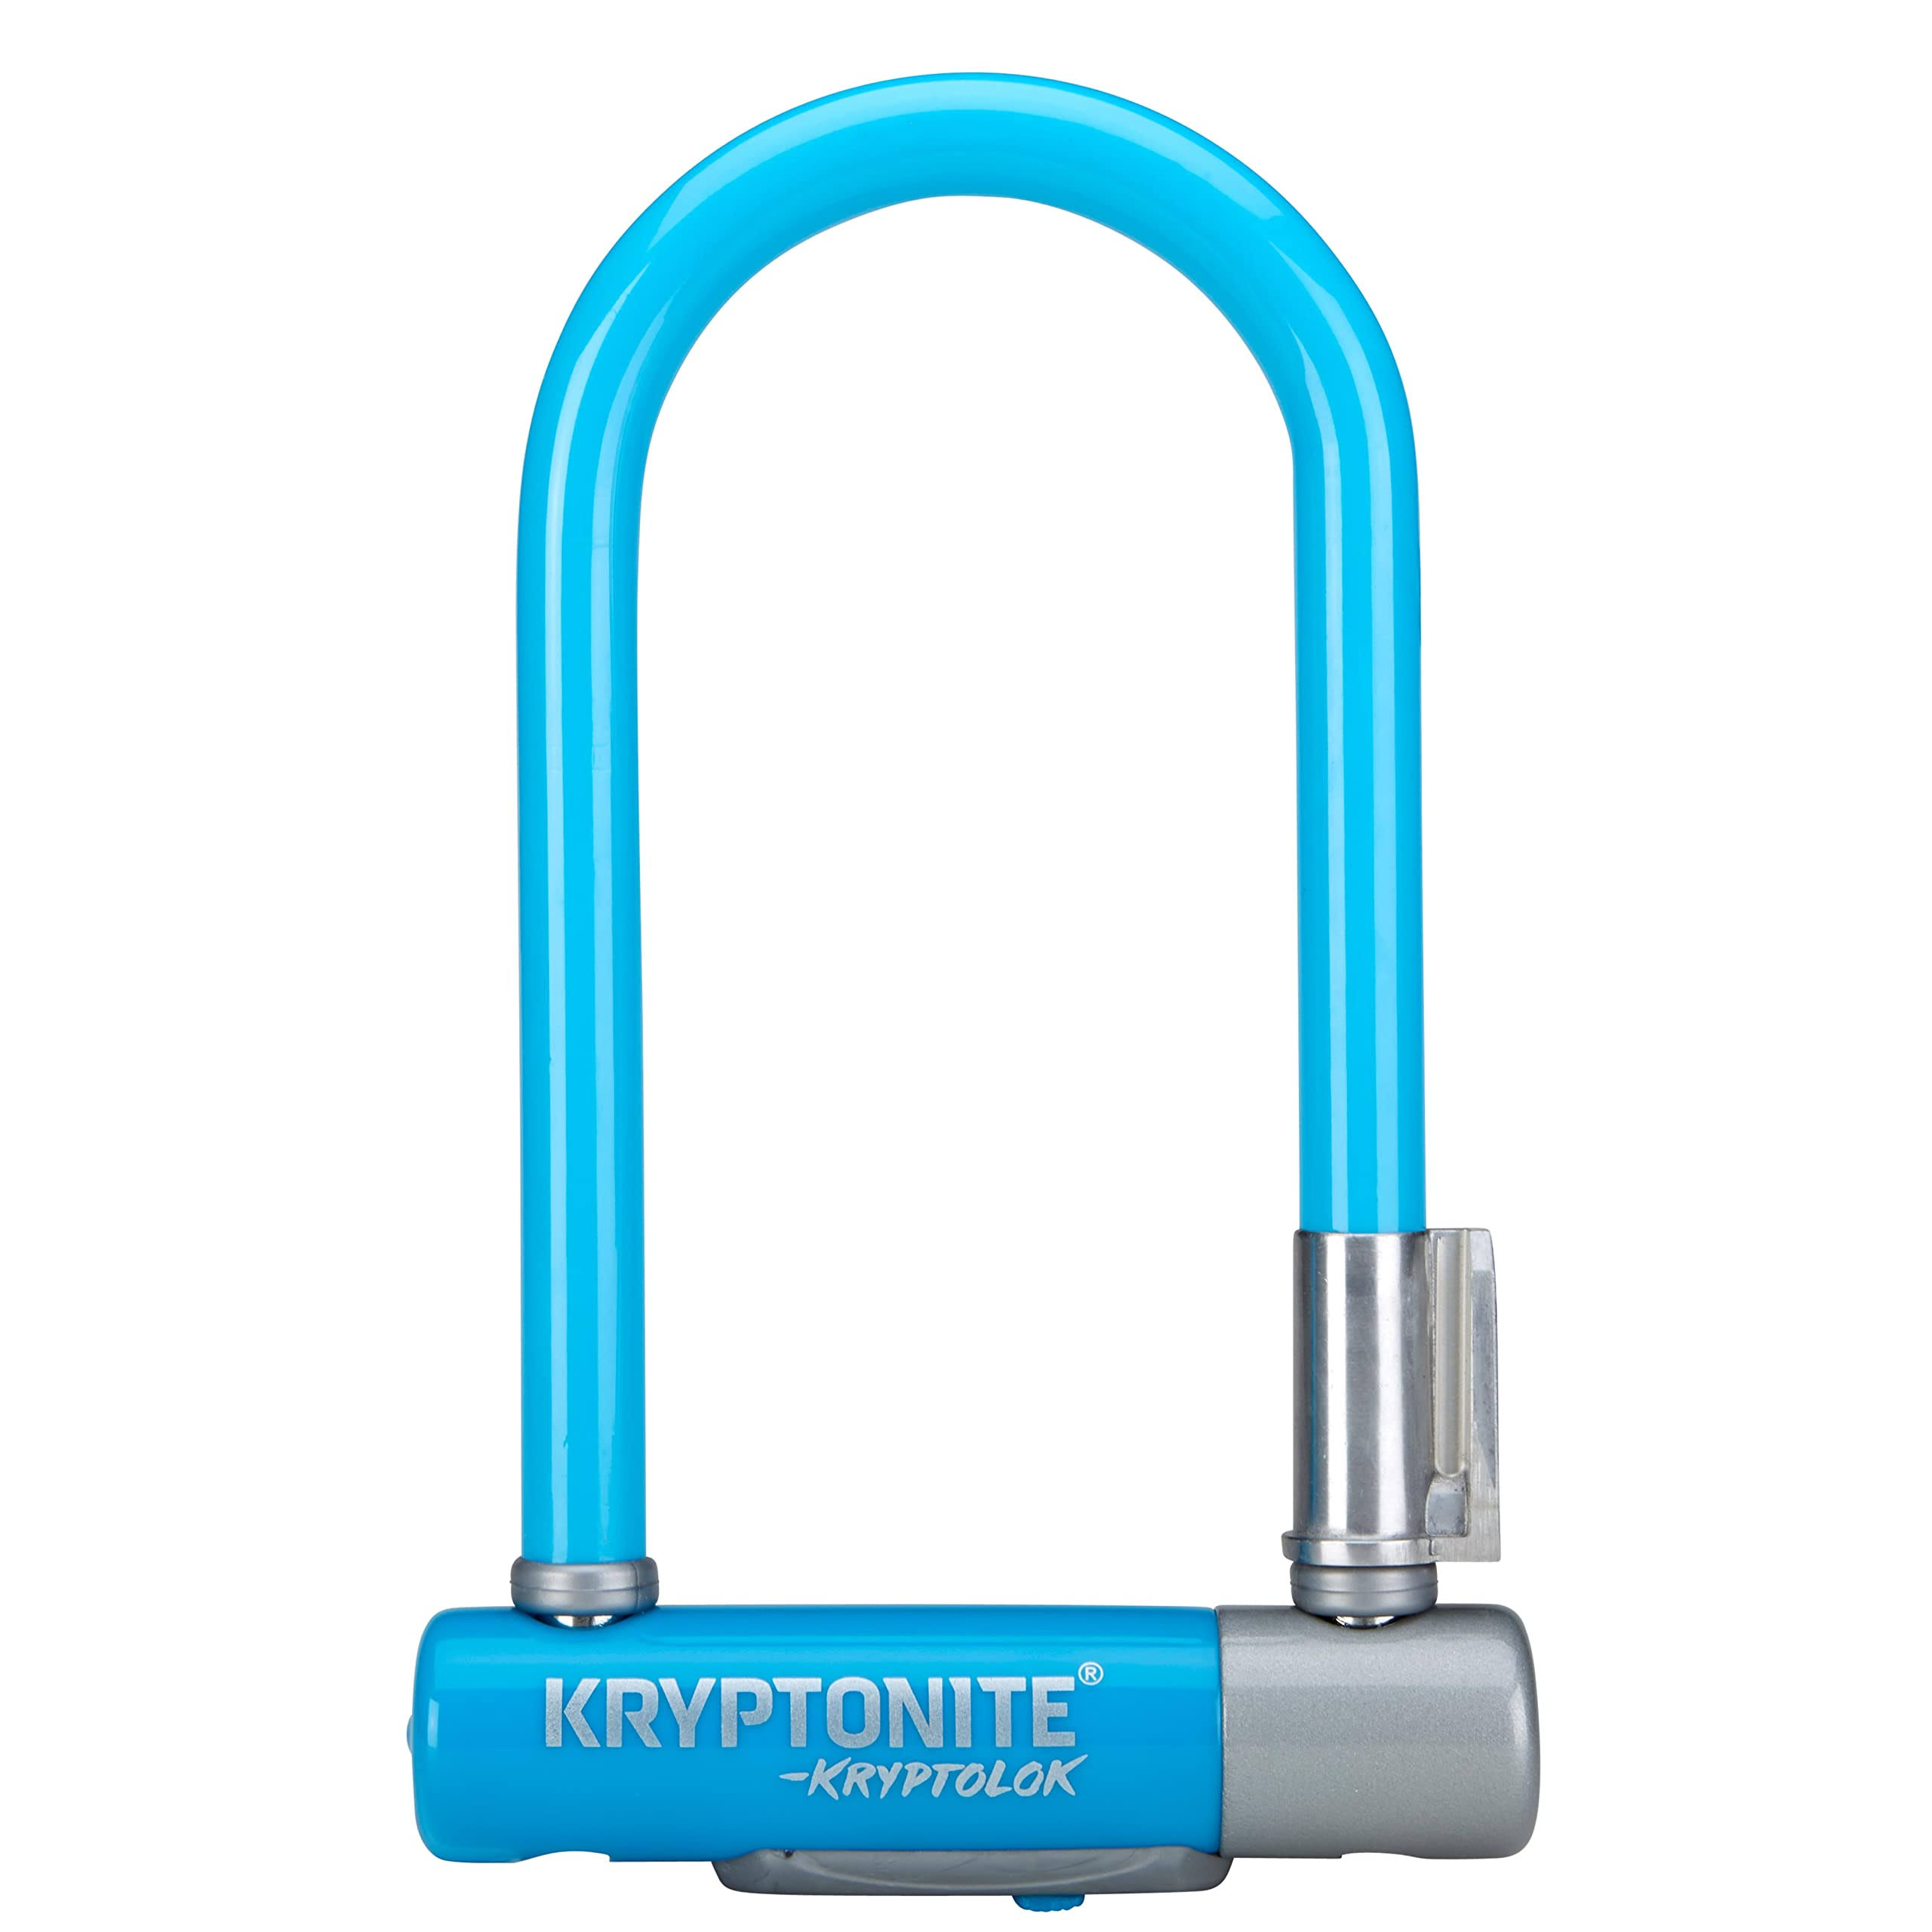 Kryptonite Kryptolok Mini 7 U Lock - Blue, 8.2cm x 17cm